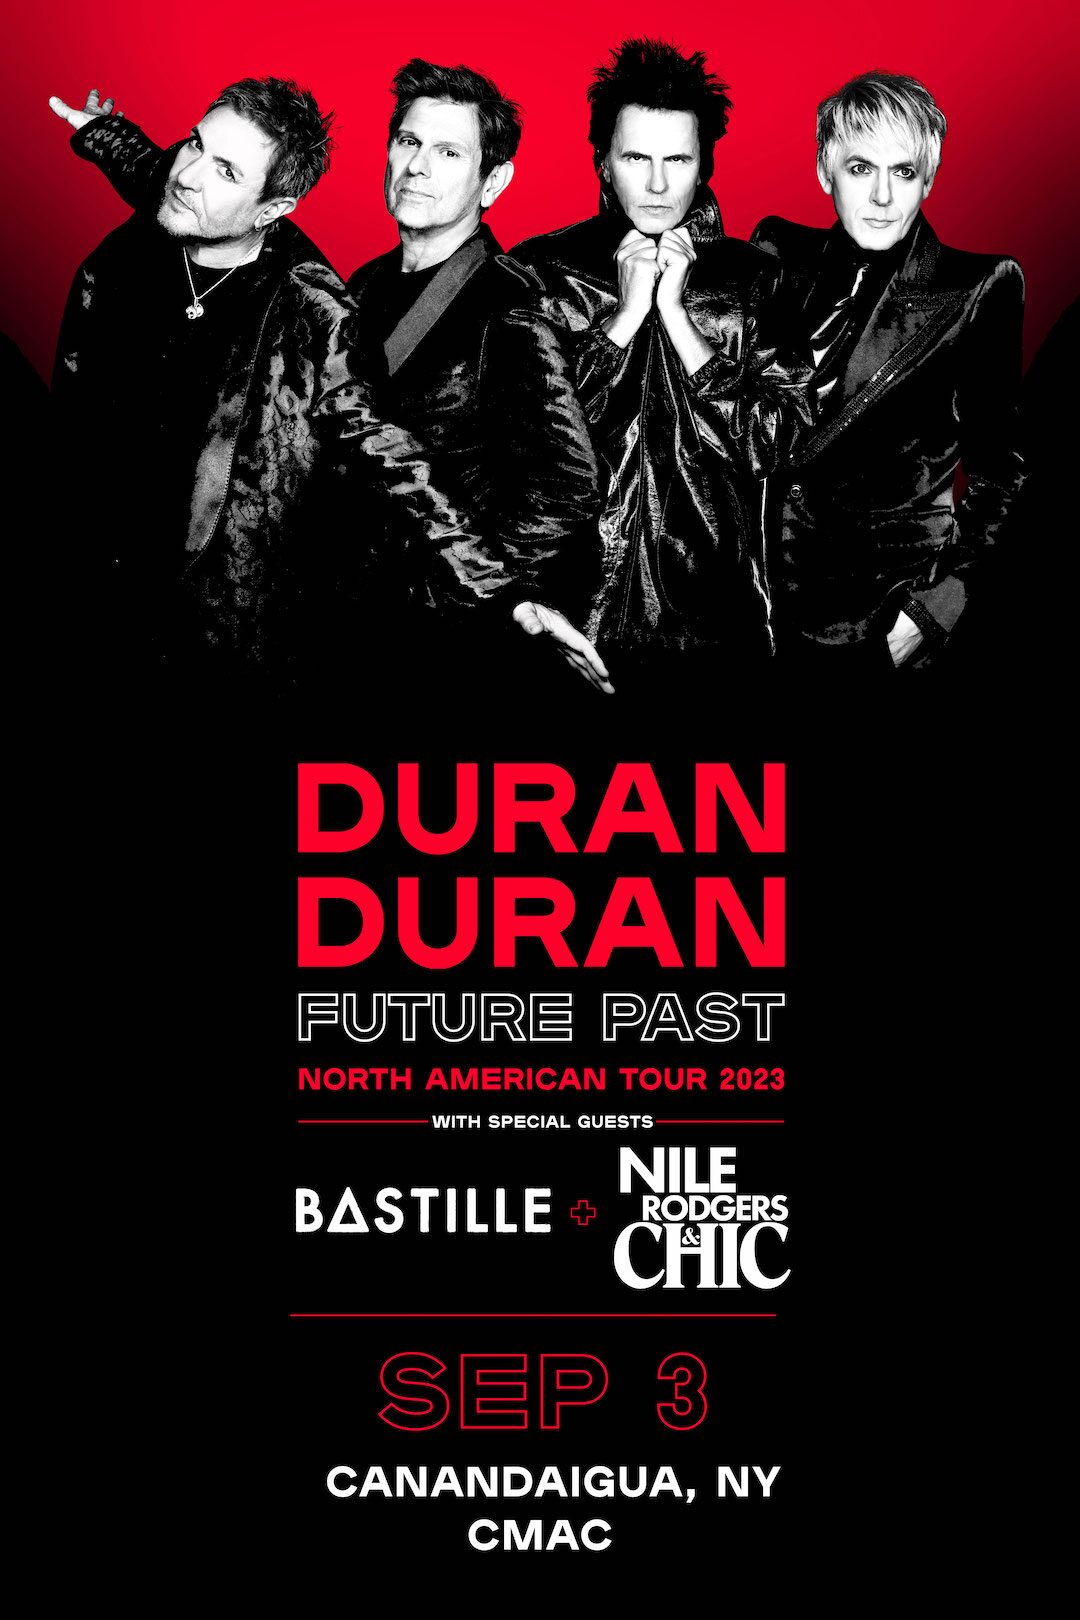 CMAC 2023 Concerts and Events Calendar feat. Santana, Duran Duran